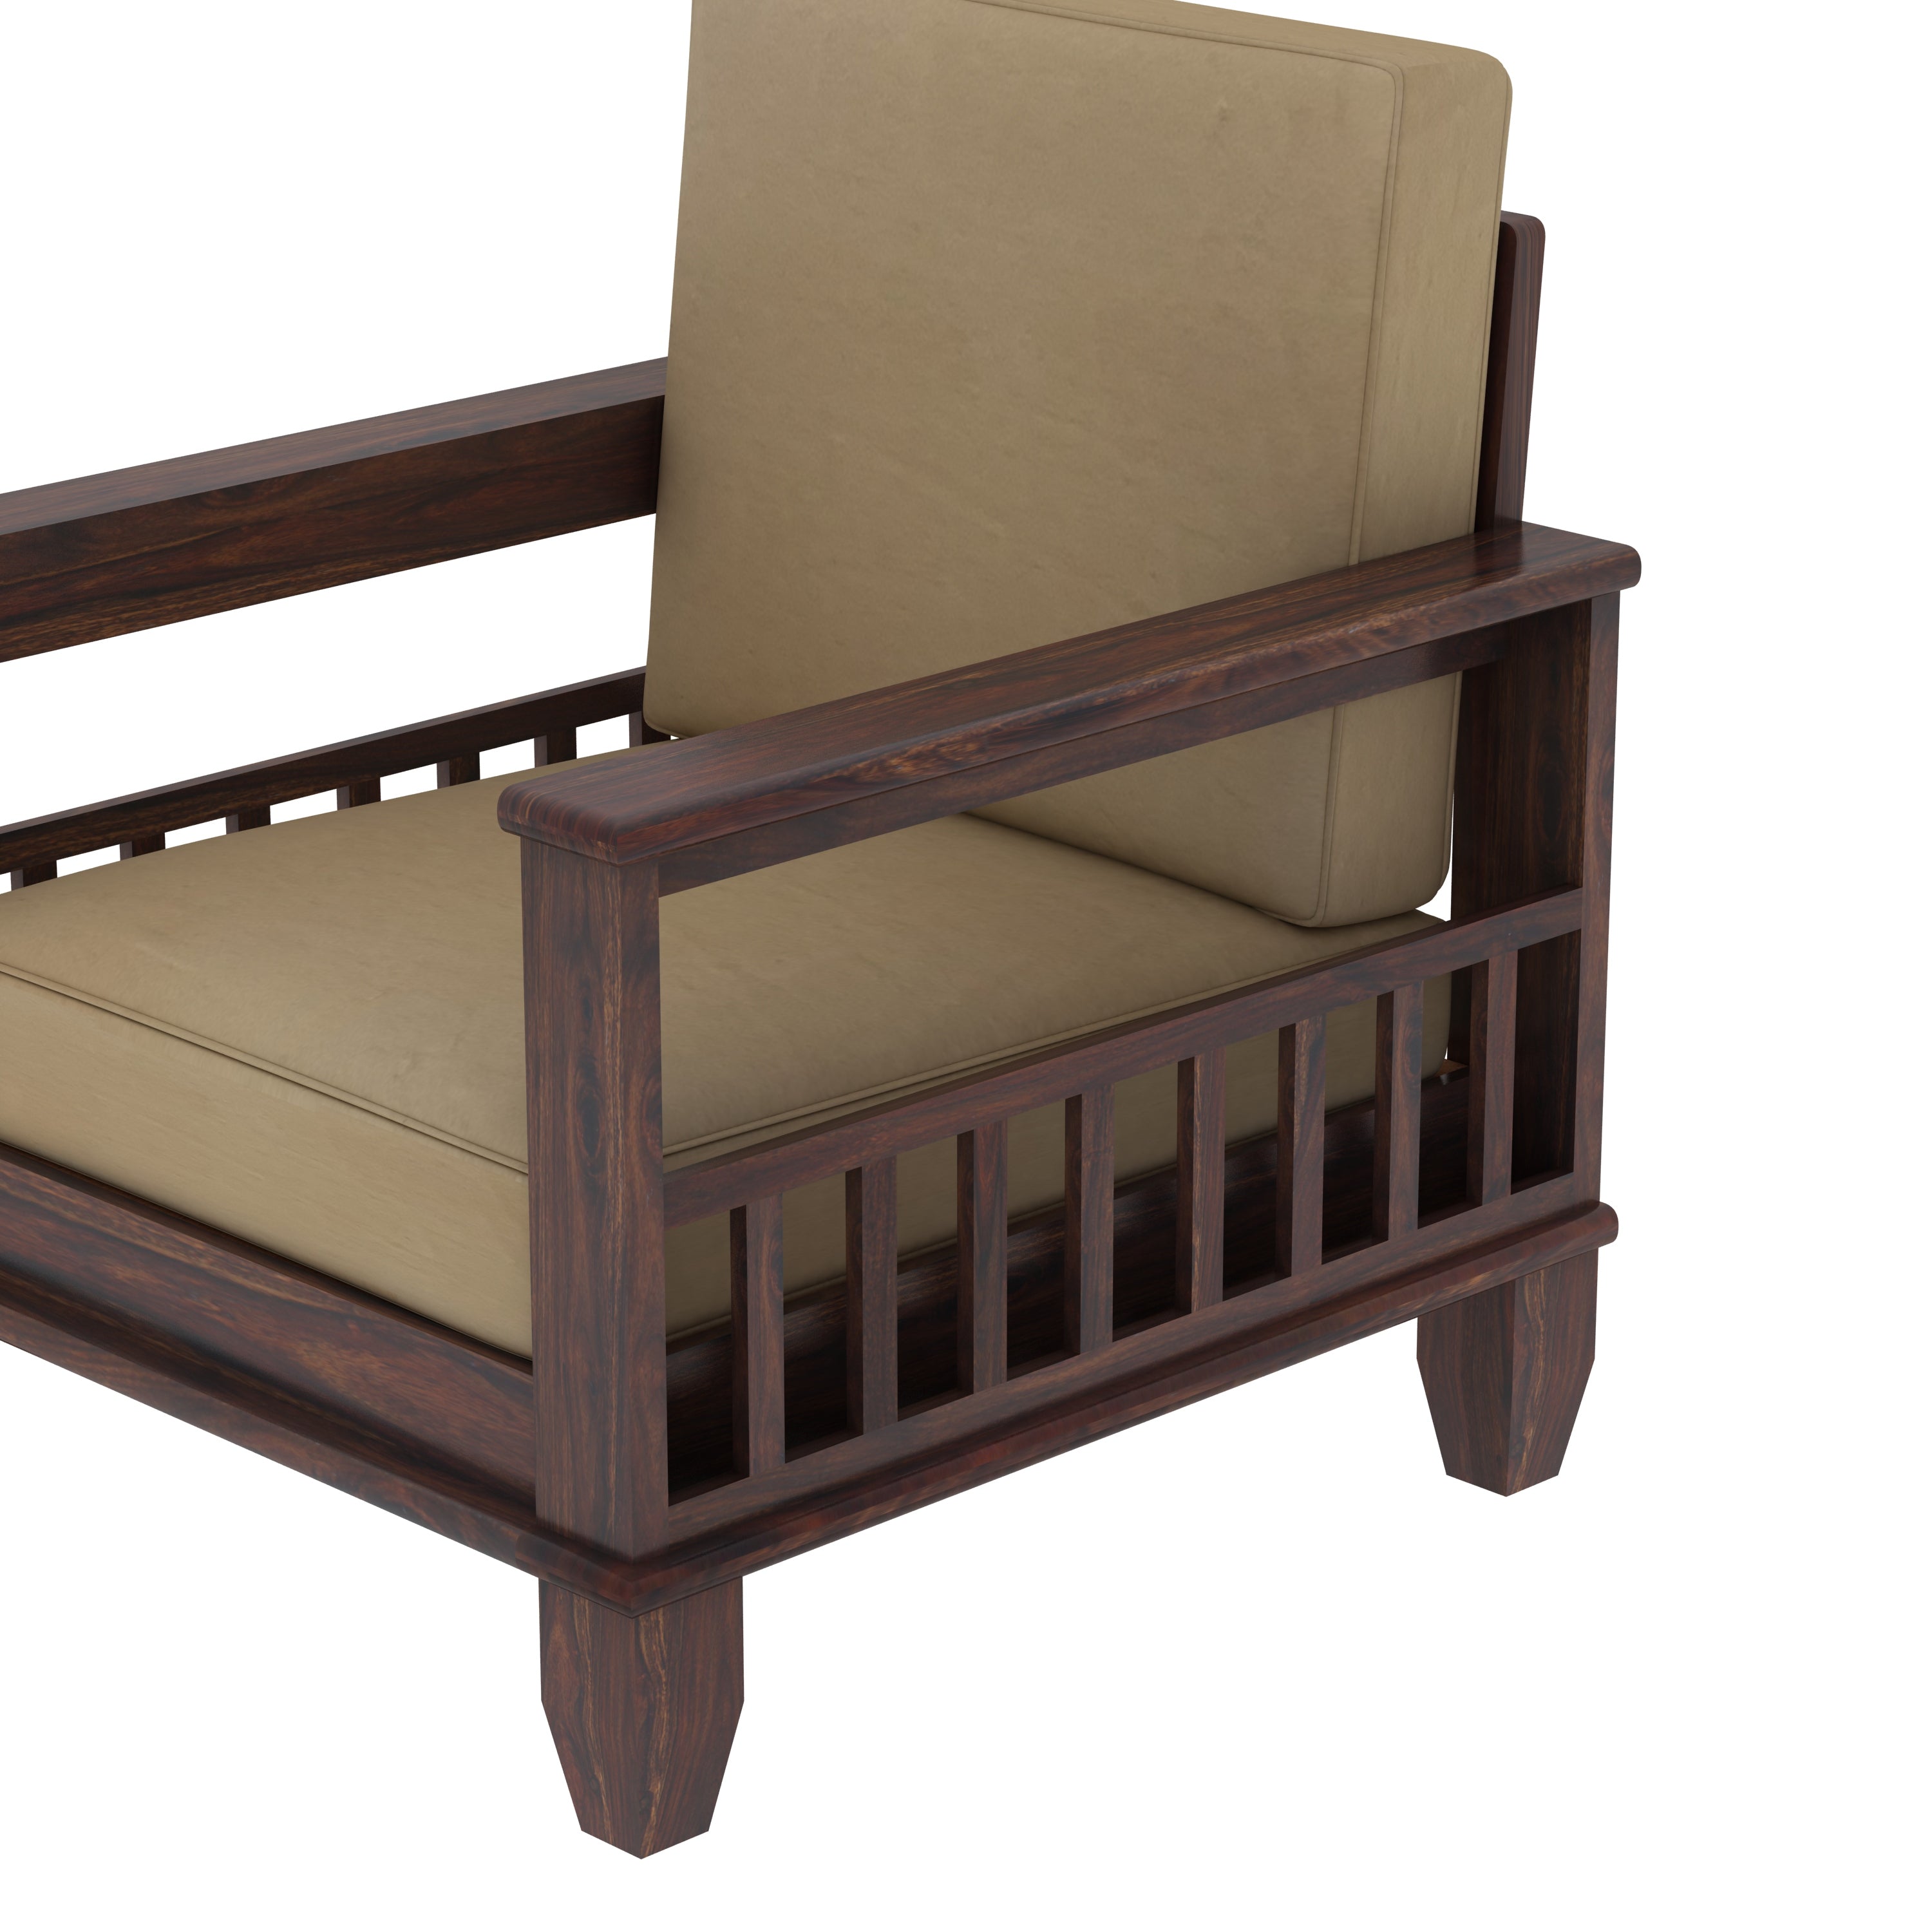 Trinity Solid Sheesham Wood Single Seater Sofa (Walnut Finish)